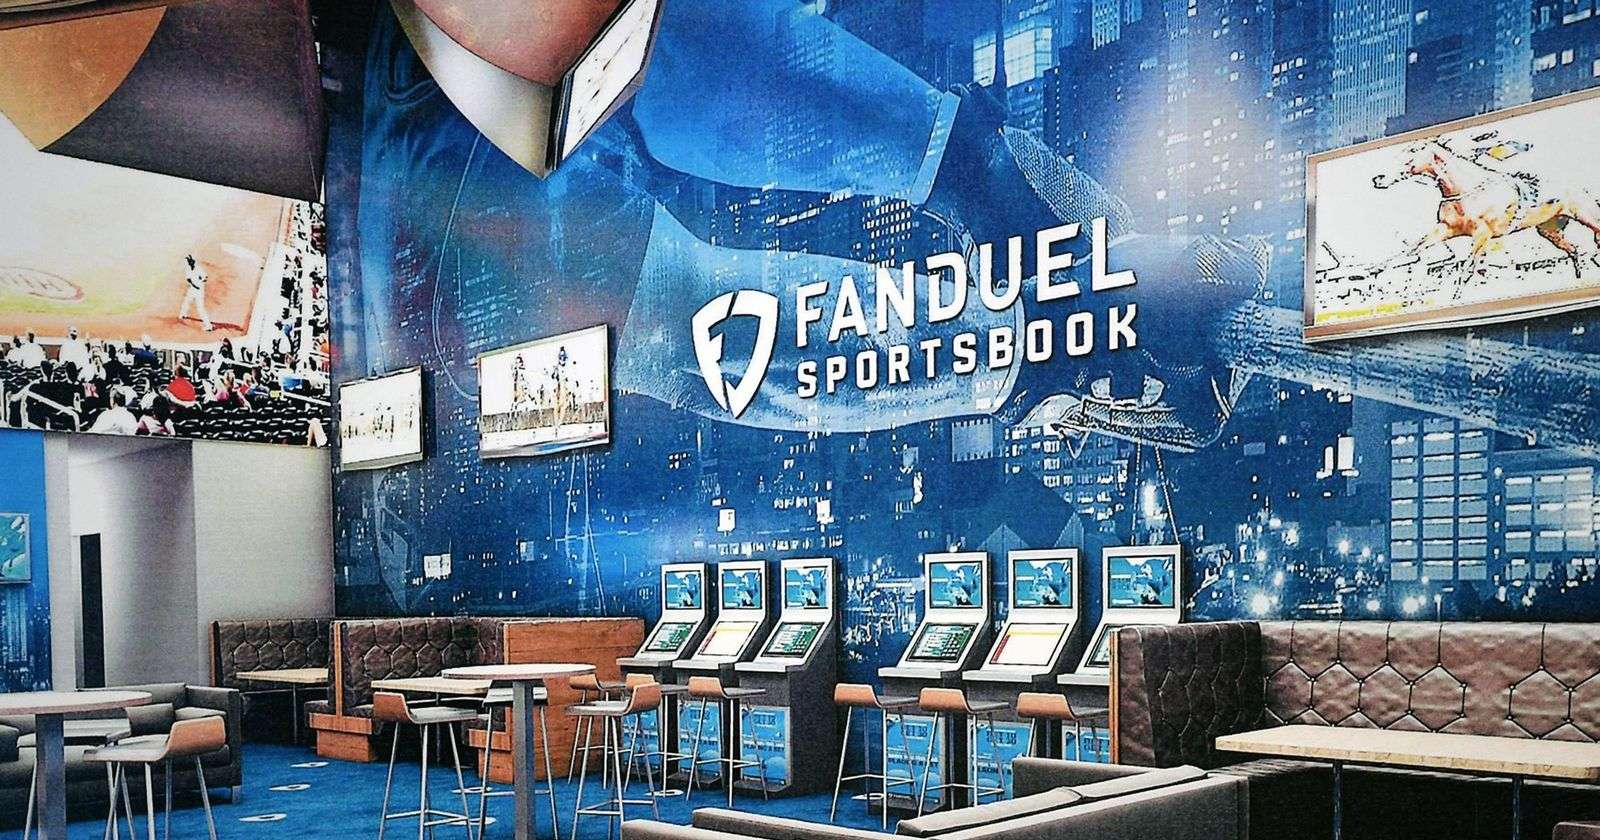 How To Win On Fanduel Casino